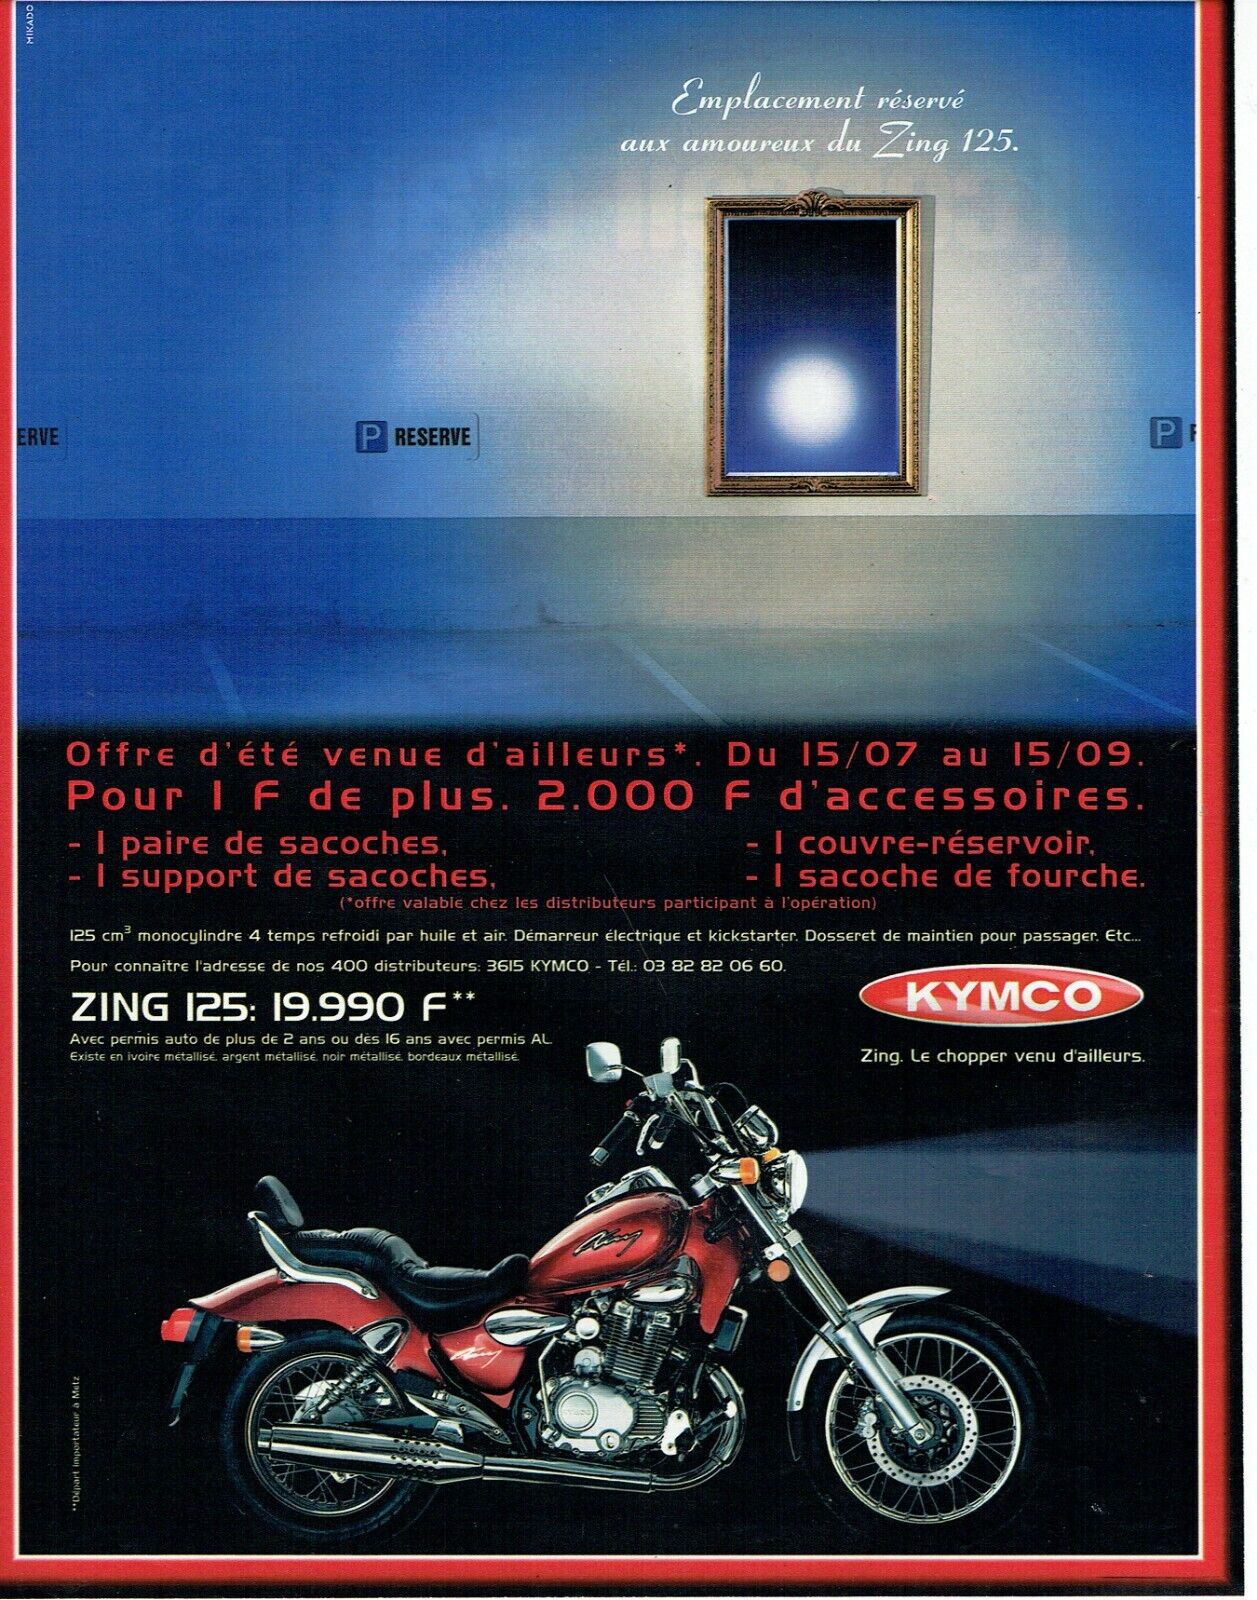 1998 Kymco Motorcycle Zing 125 Advertising 420 